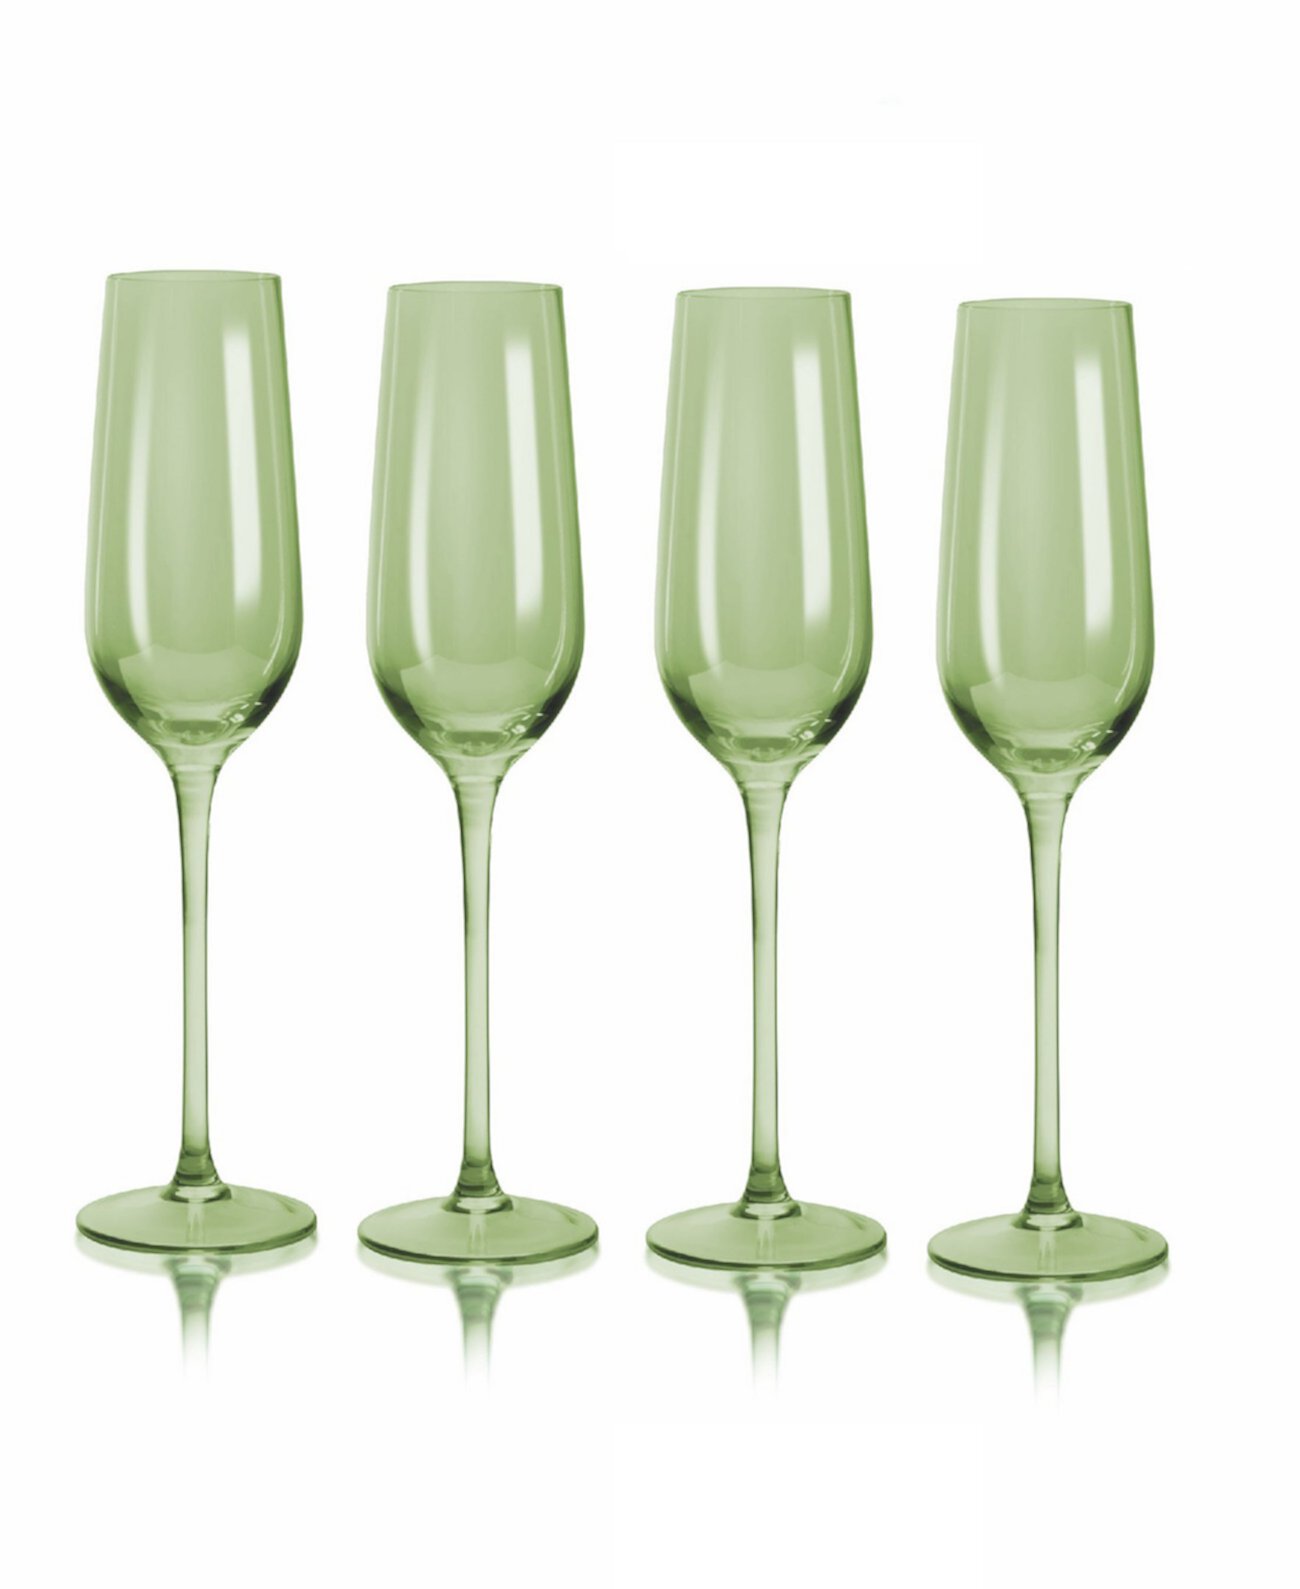 Бокалы для шампанского Carnival, 9 унций, набор из 4 шт. Qualia Glass